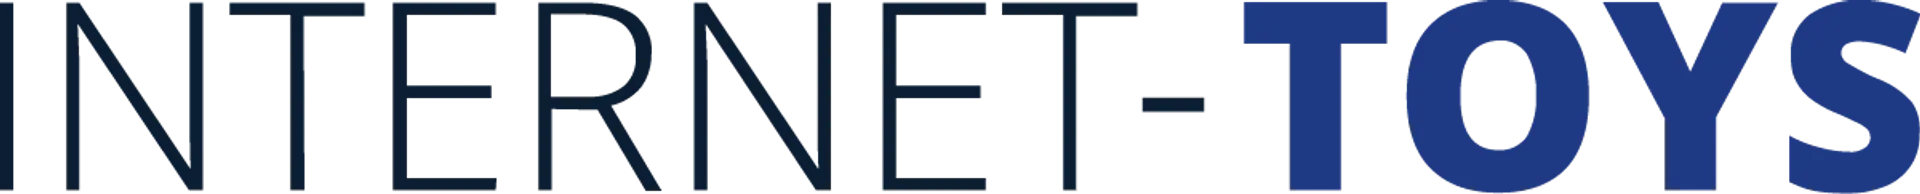 INTERNET TOYS logo